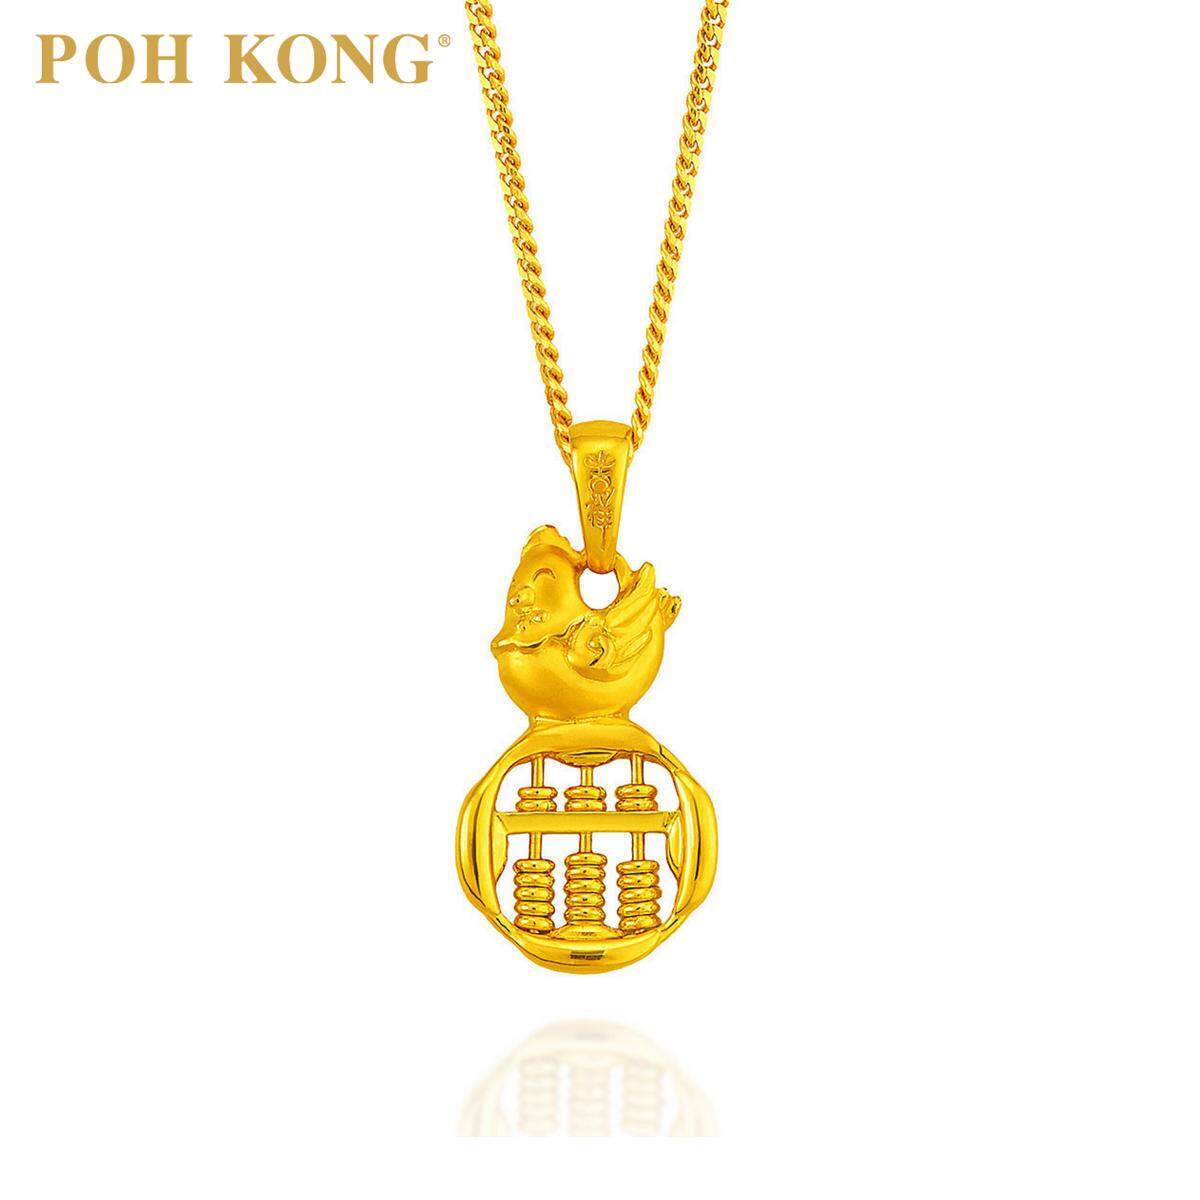 Poh Kong Gold Jewellery Pendant Price Promotion Apr 2021 Biggo Malaysia